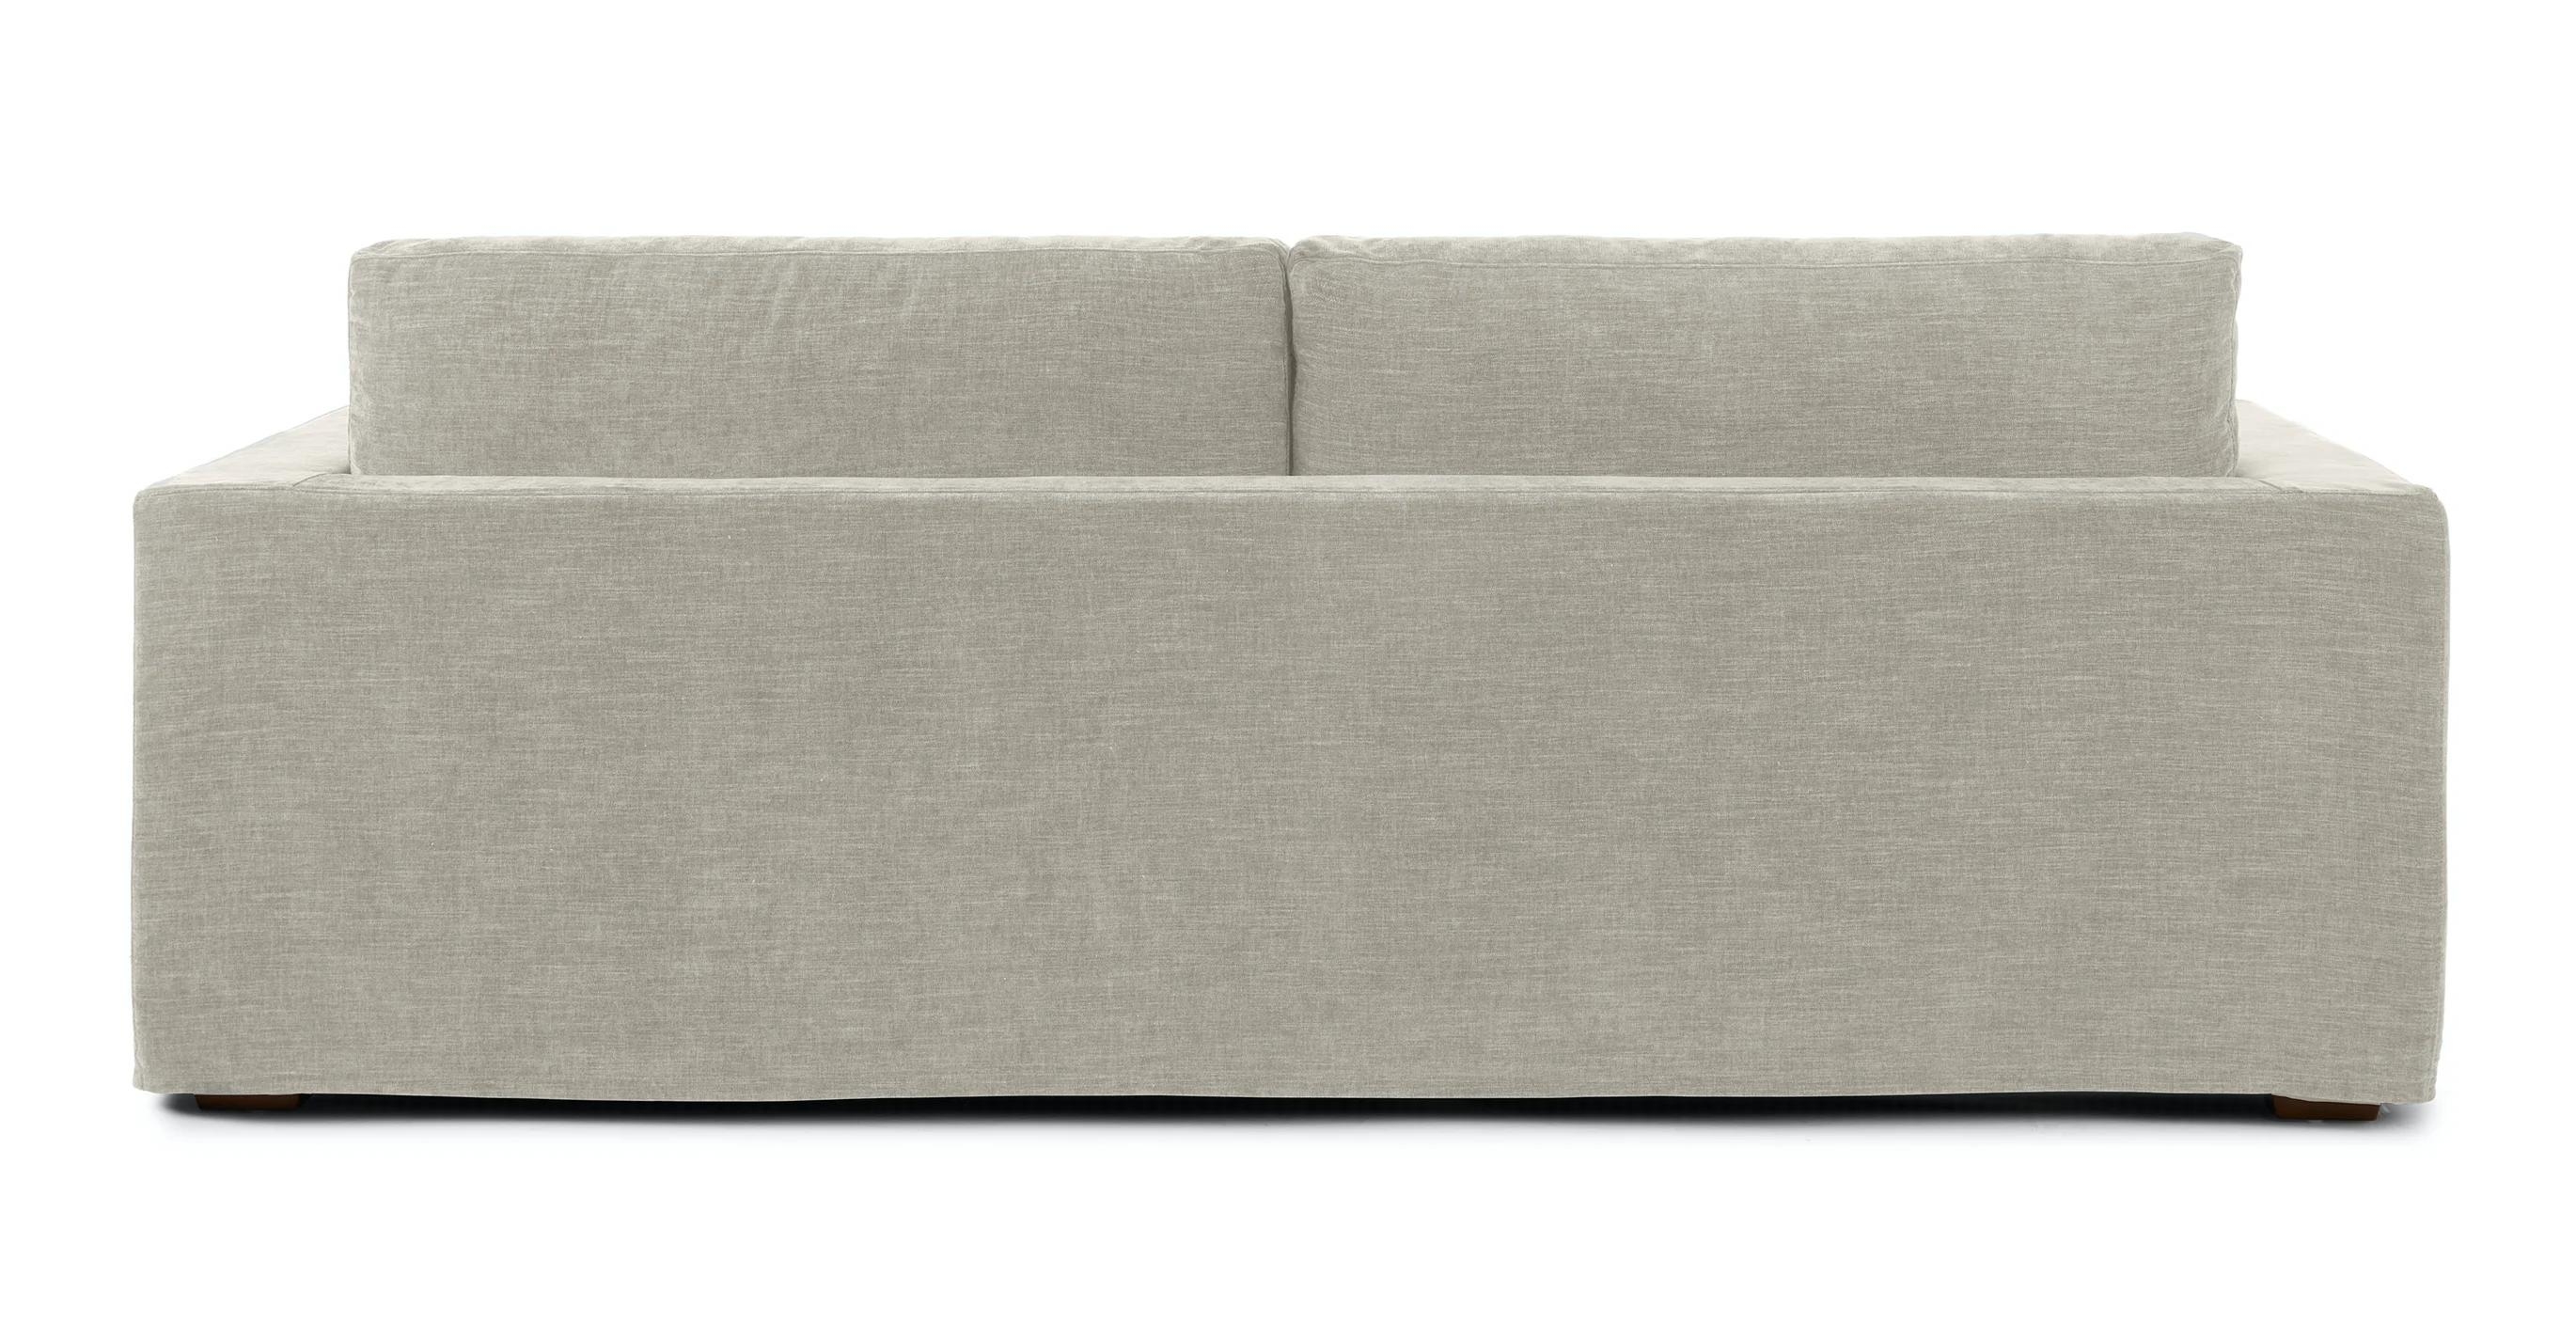 Alzey Slipcover Sofa, Whistle Gray - Image 3